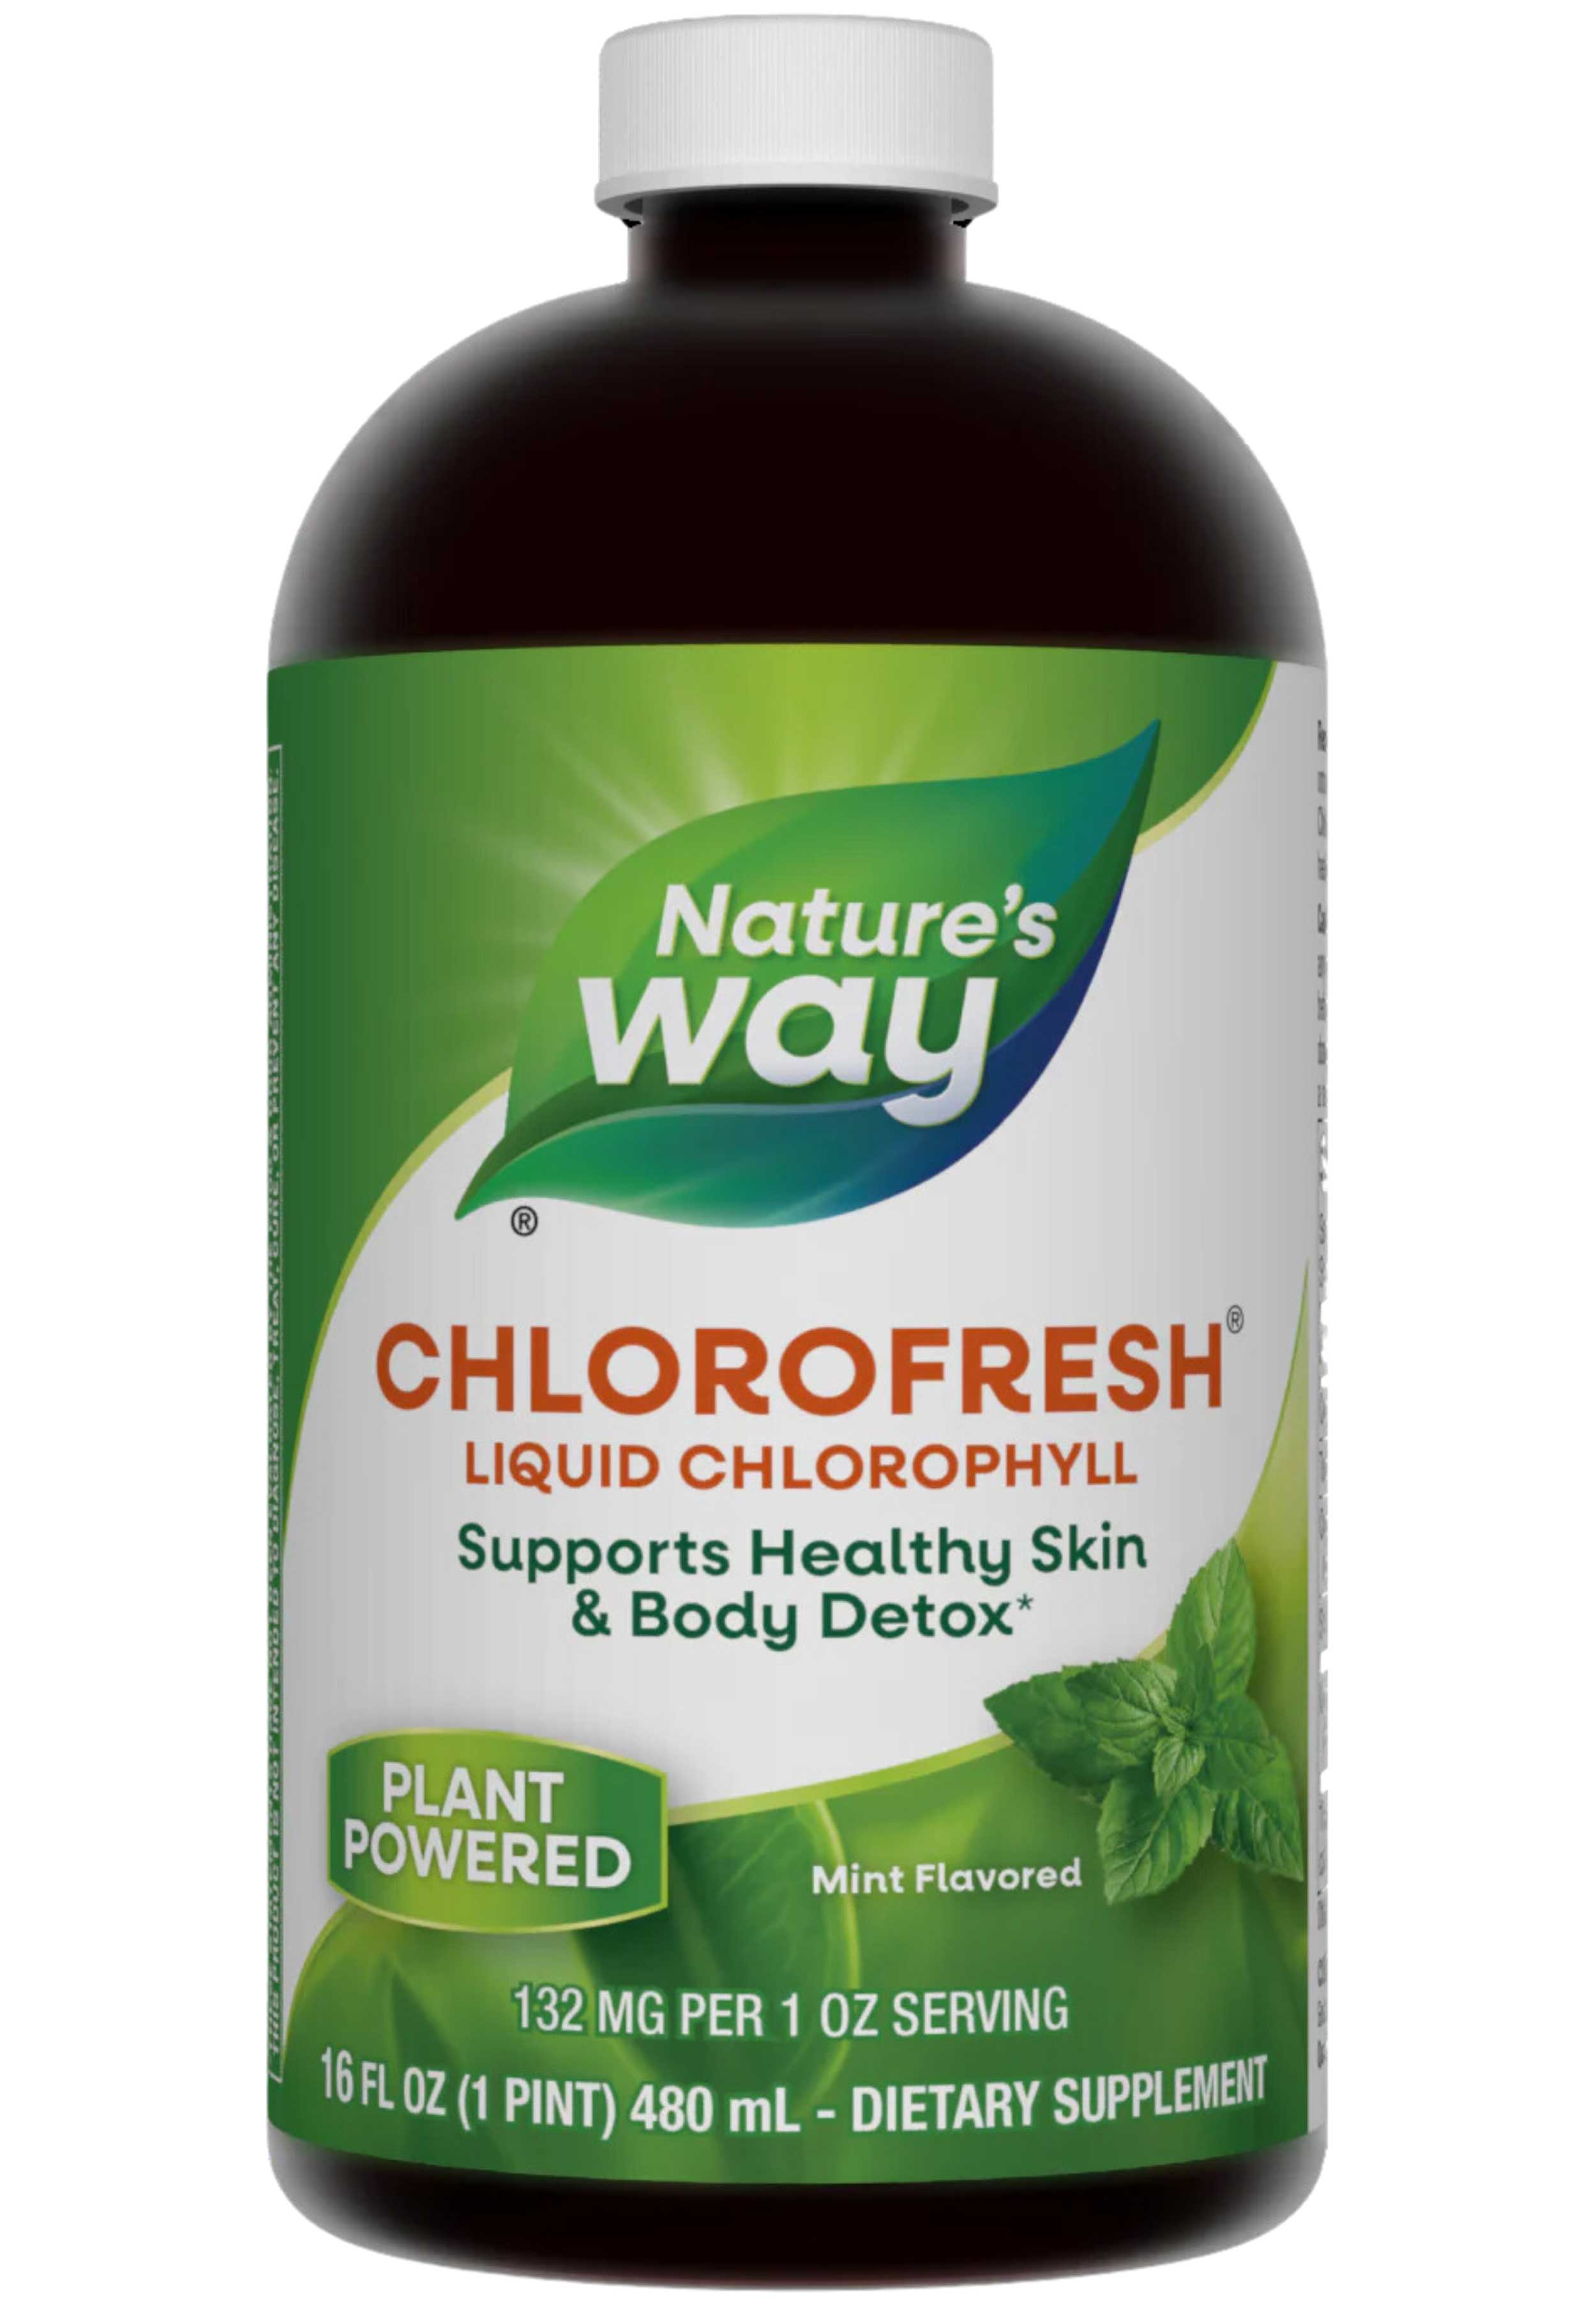 Nature's Way Chlorofresh Liquid Mint